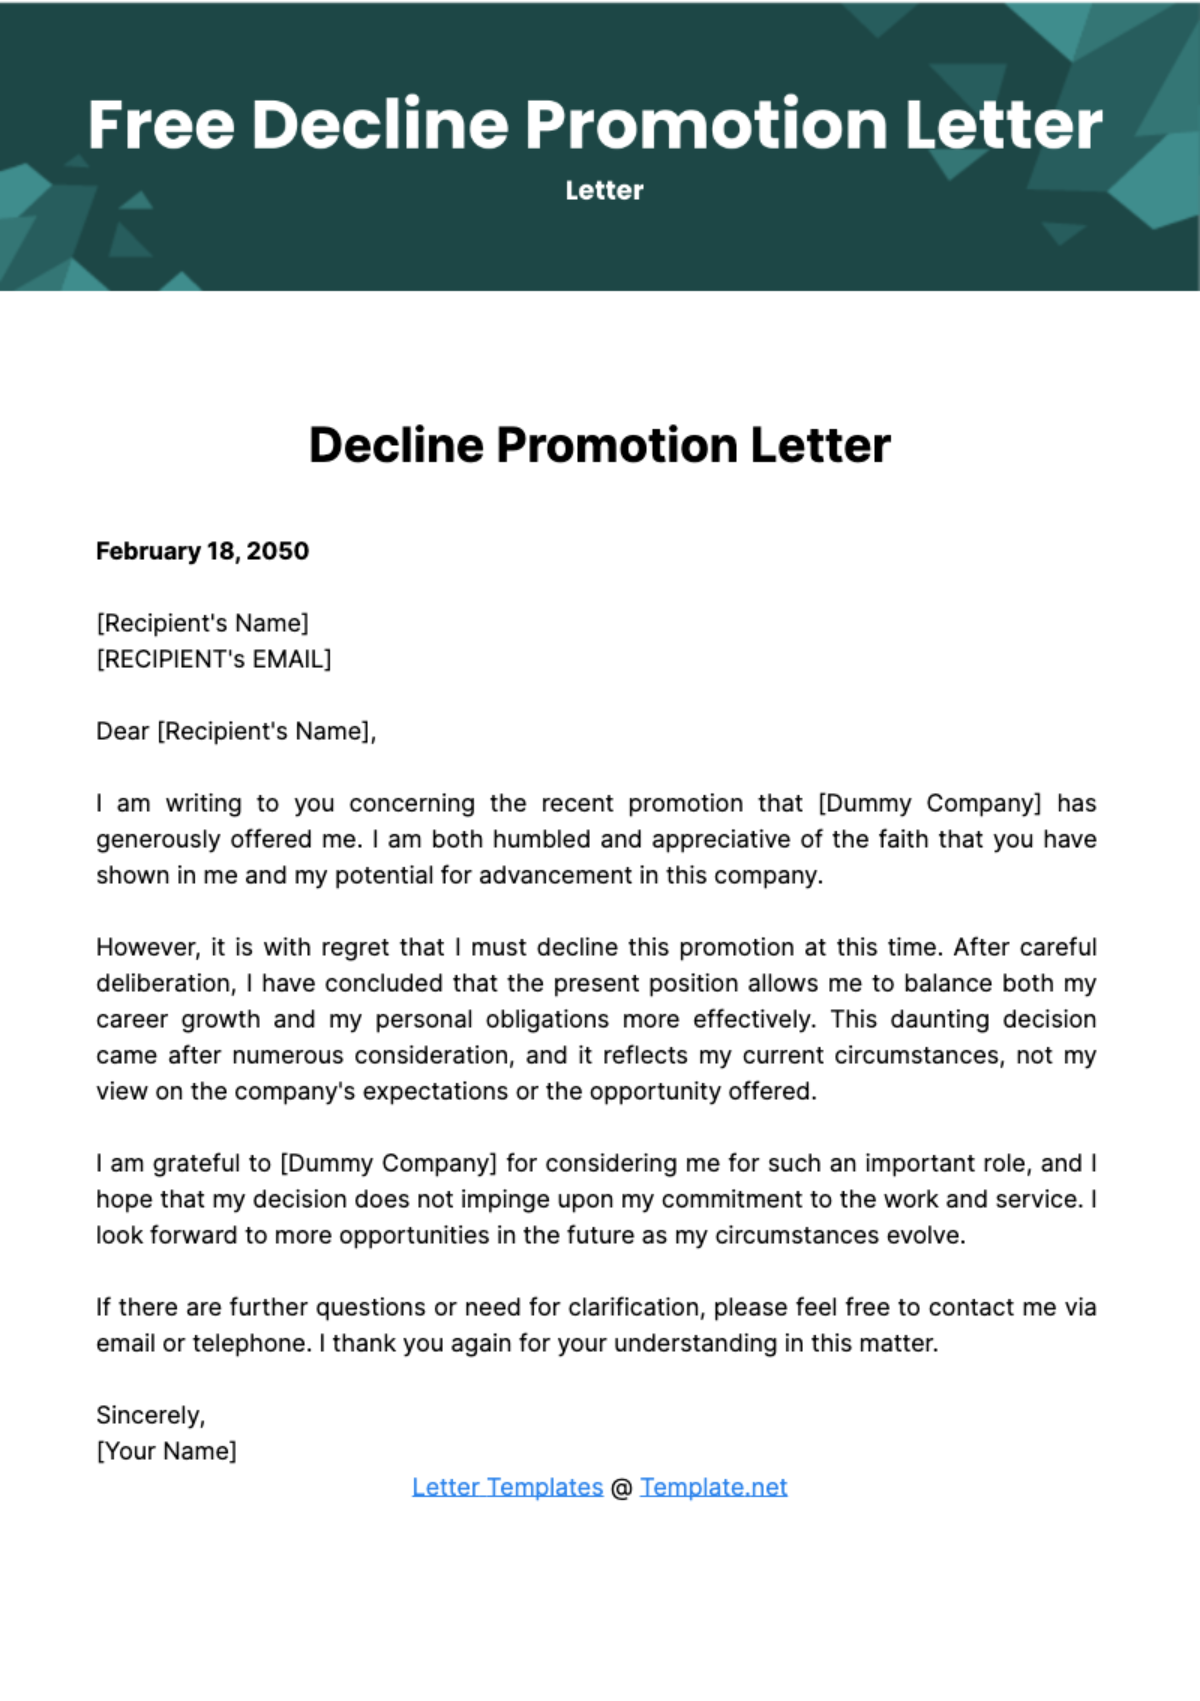 Free Decline Promotion Letter Template